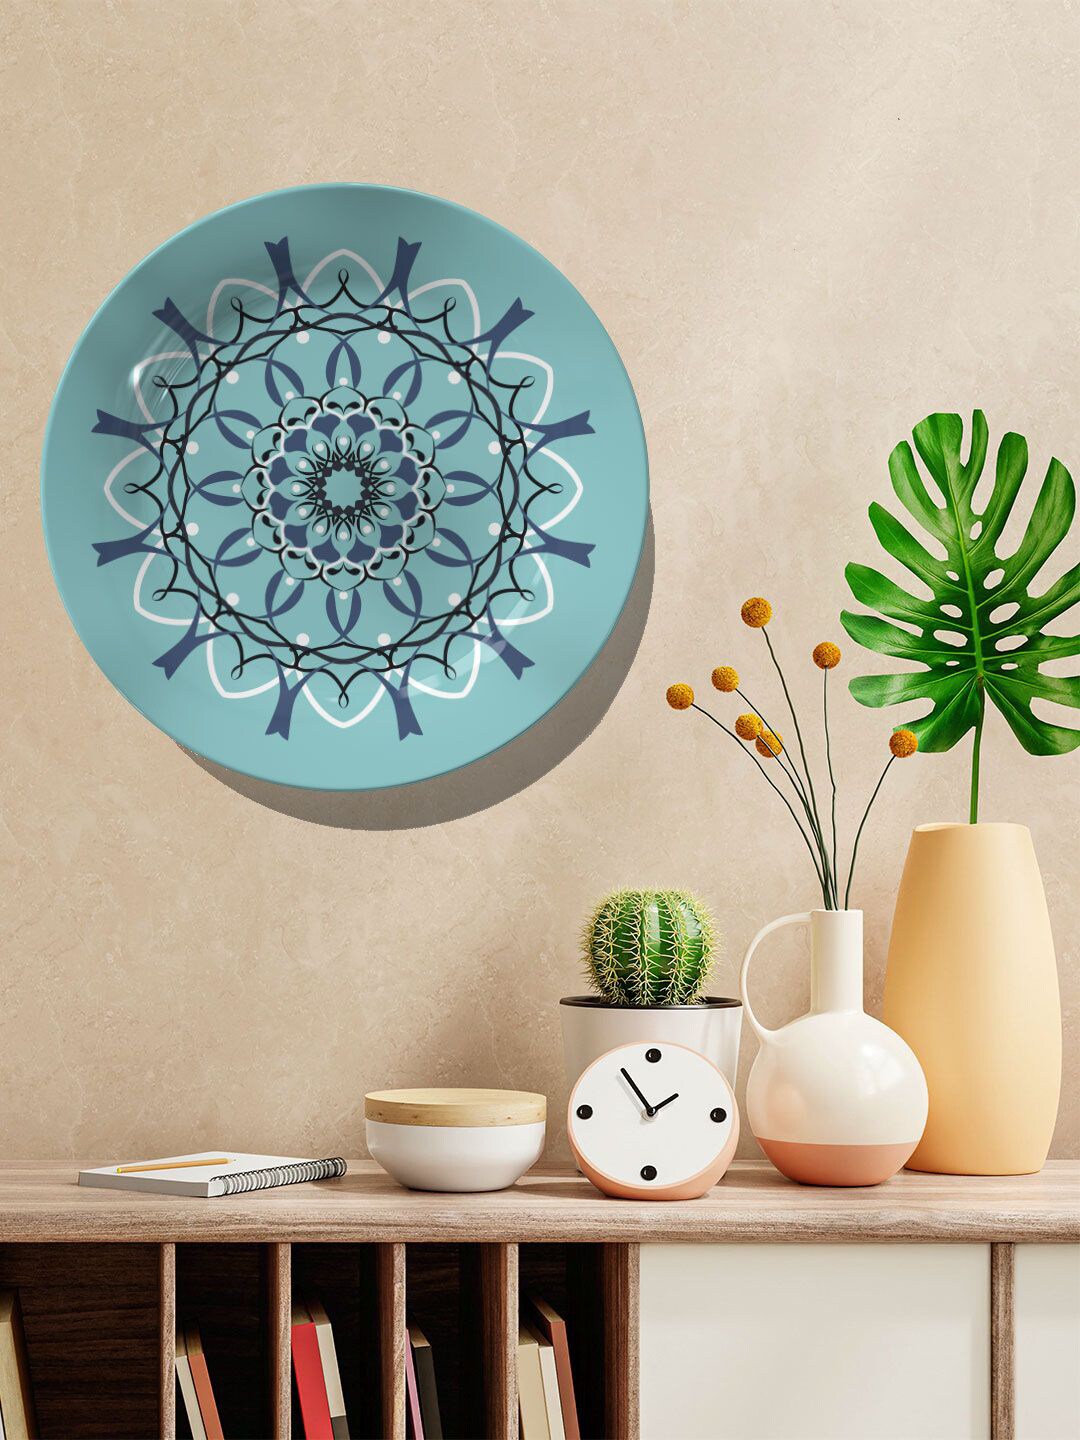 ARTSPACE Blue & White Printed Ceramic Wall Decor Plate Price in India